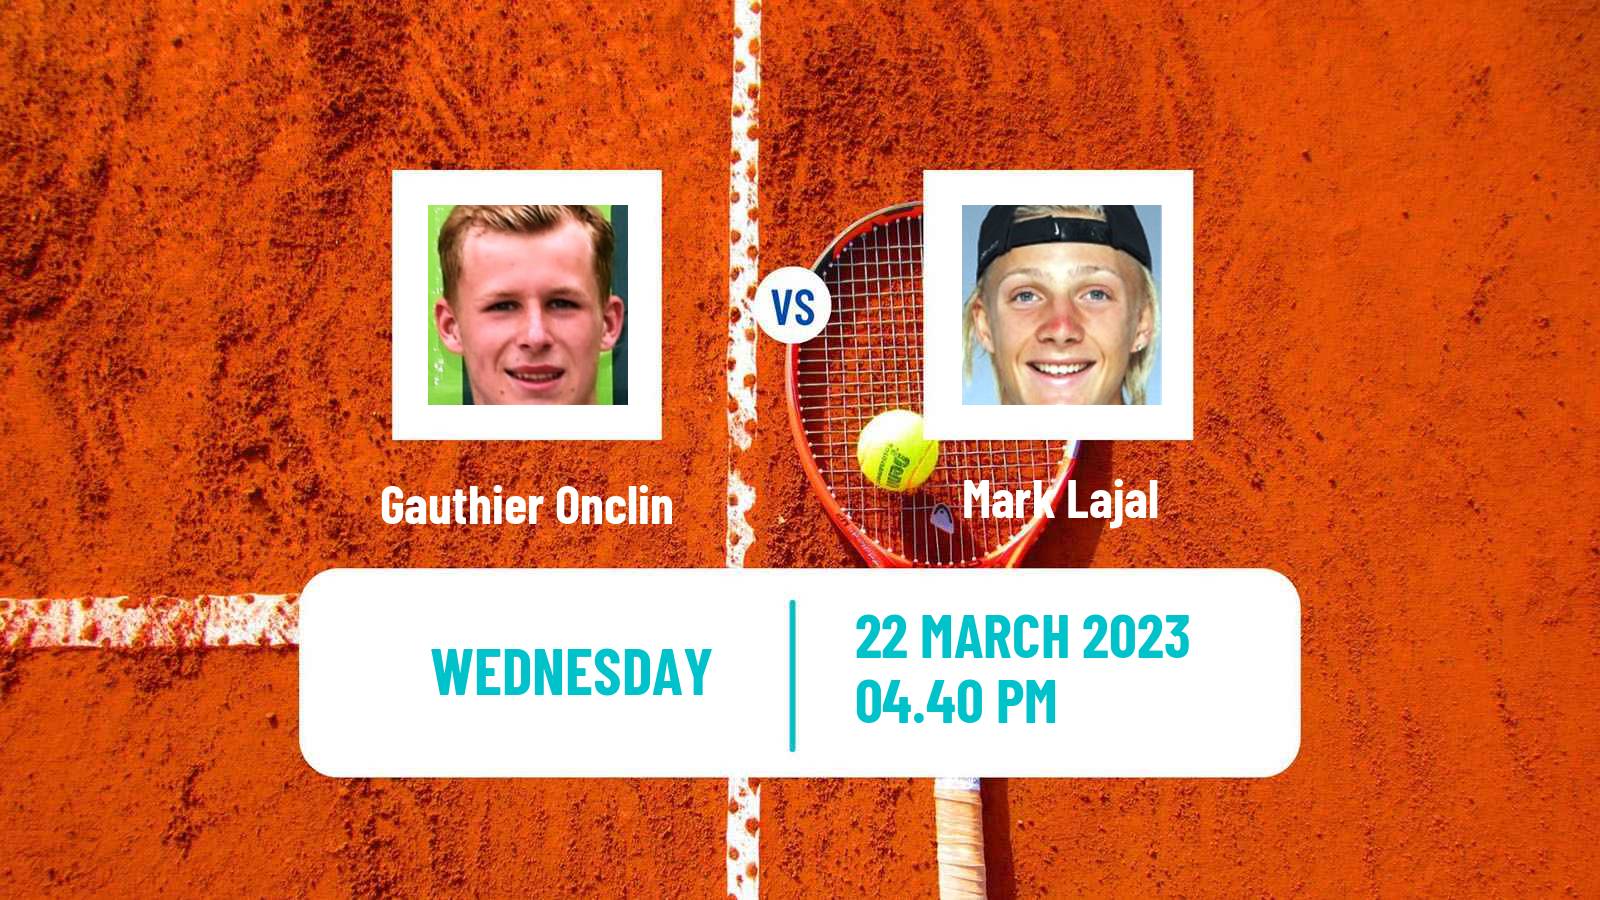 Tennis ATP Challenger Gauthier Onclin - Mark Lajal